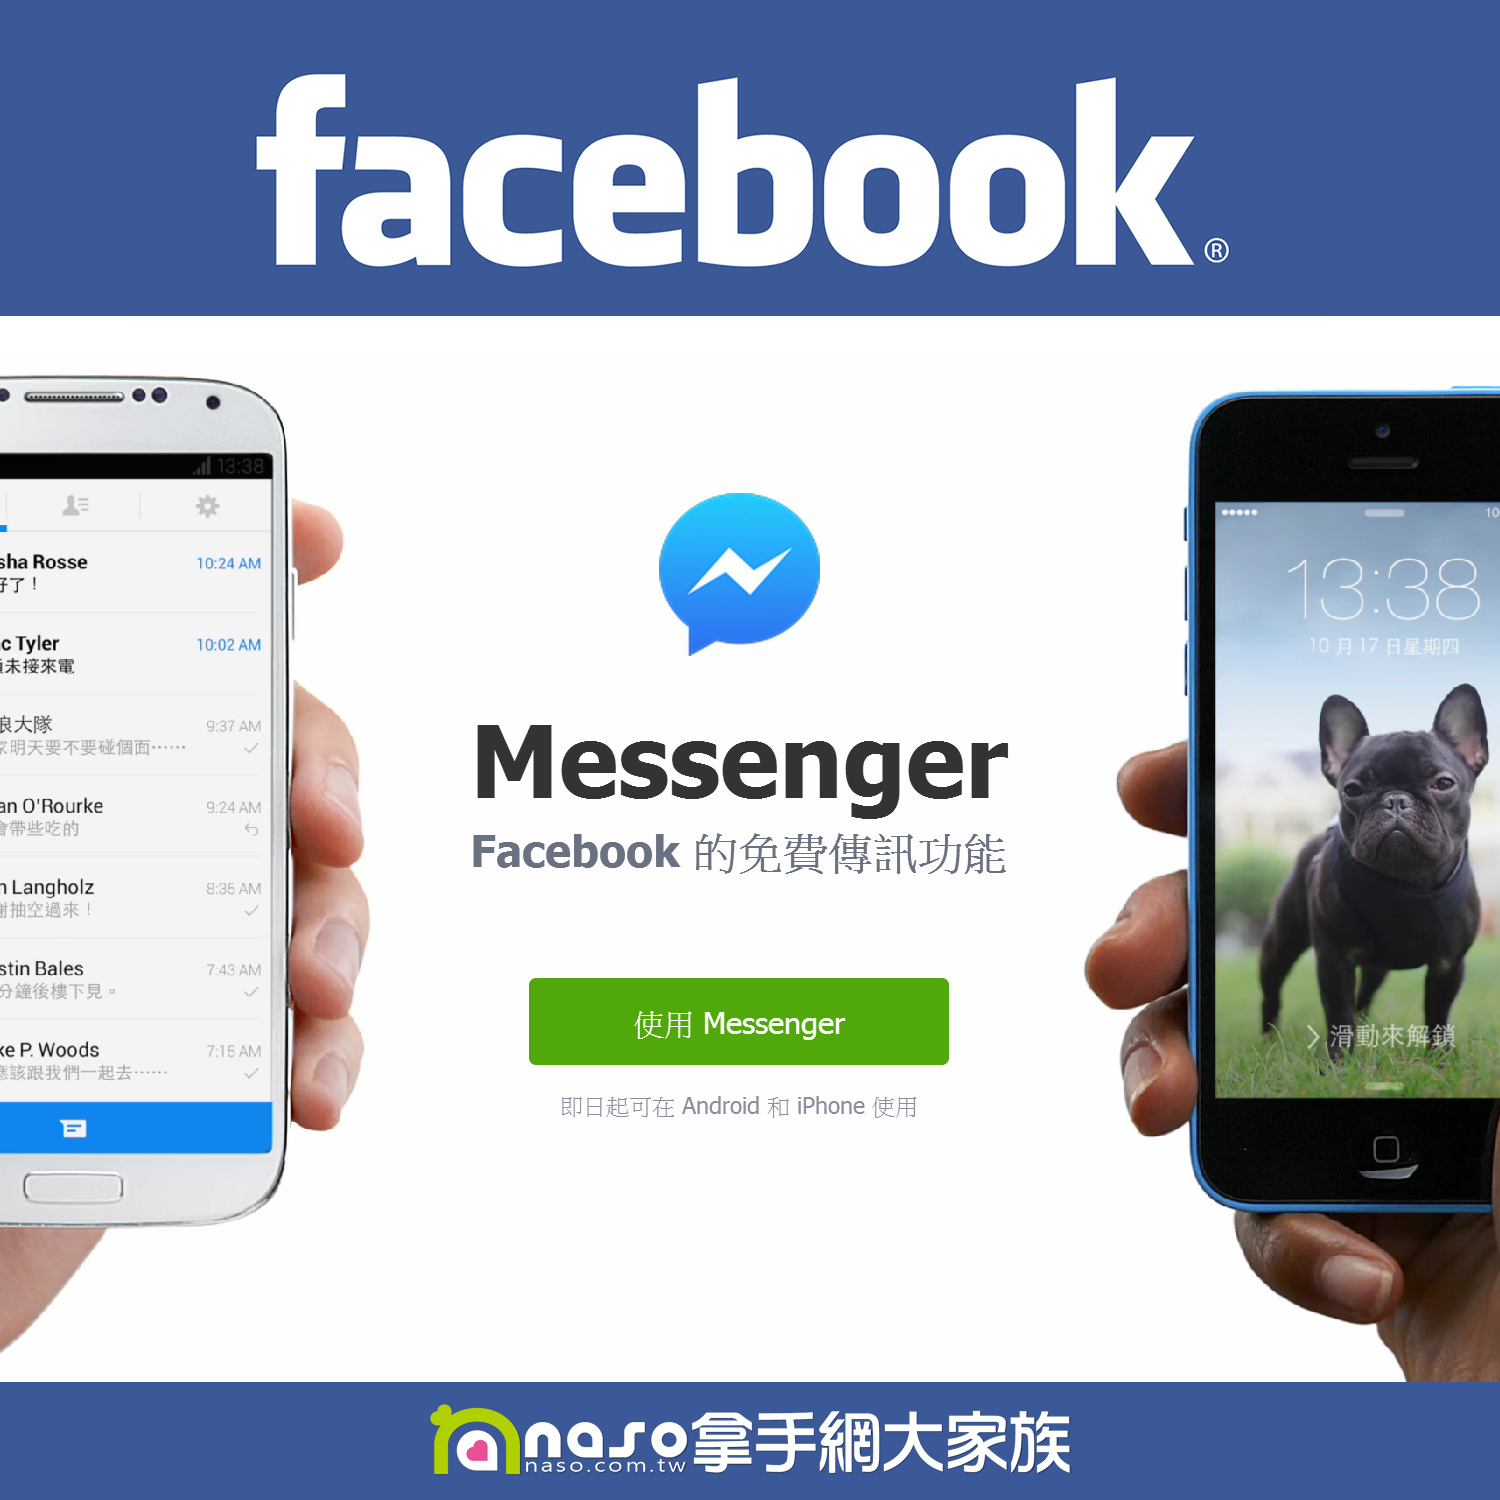 Facebook Messenger 免費通話